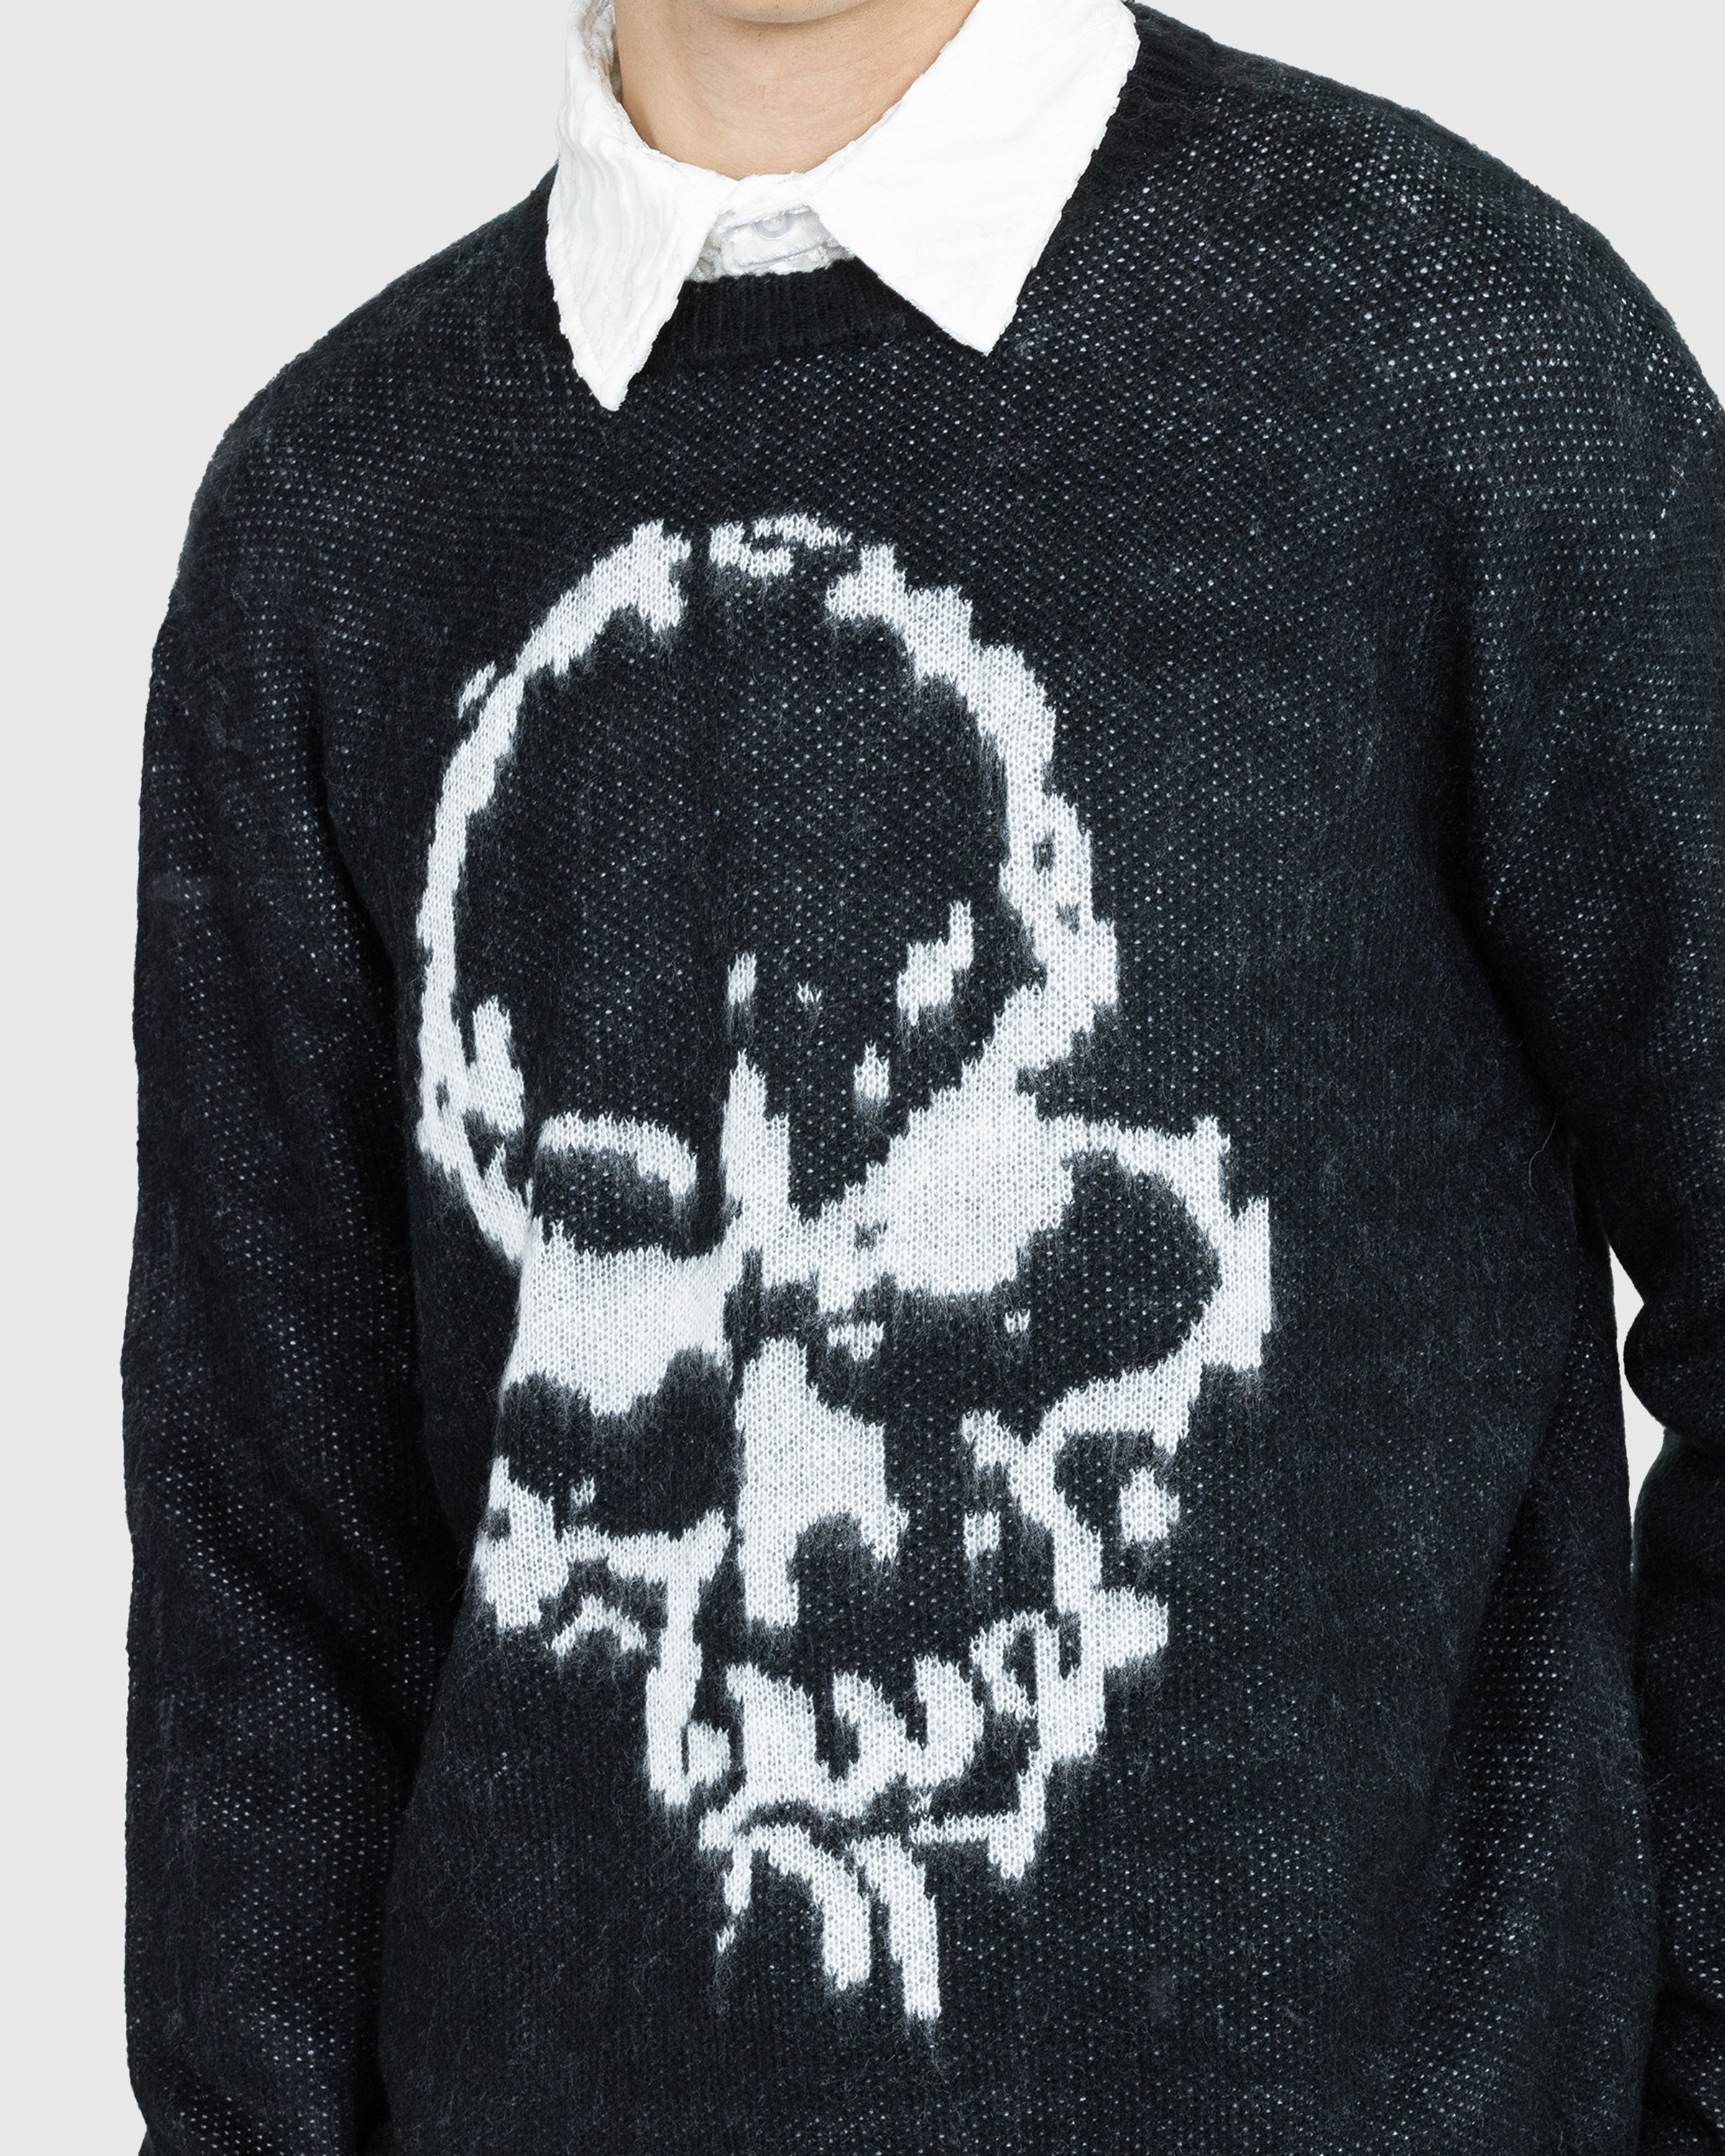 Noon Goons - Gatekeeper Sweater Black - Clothing - Black - Image 3